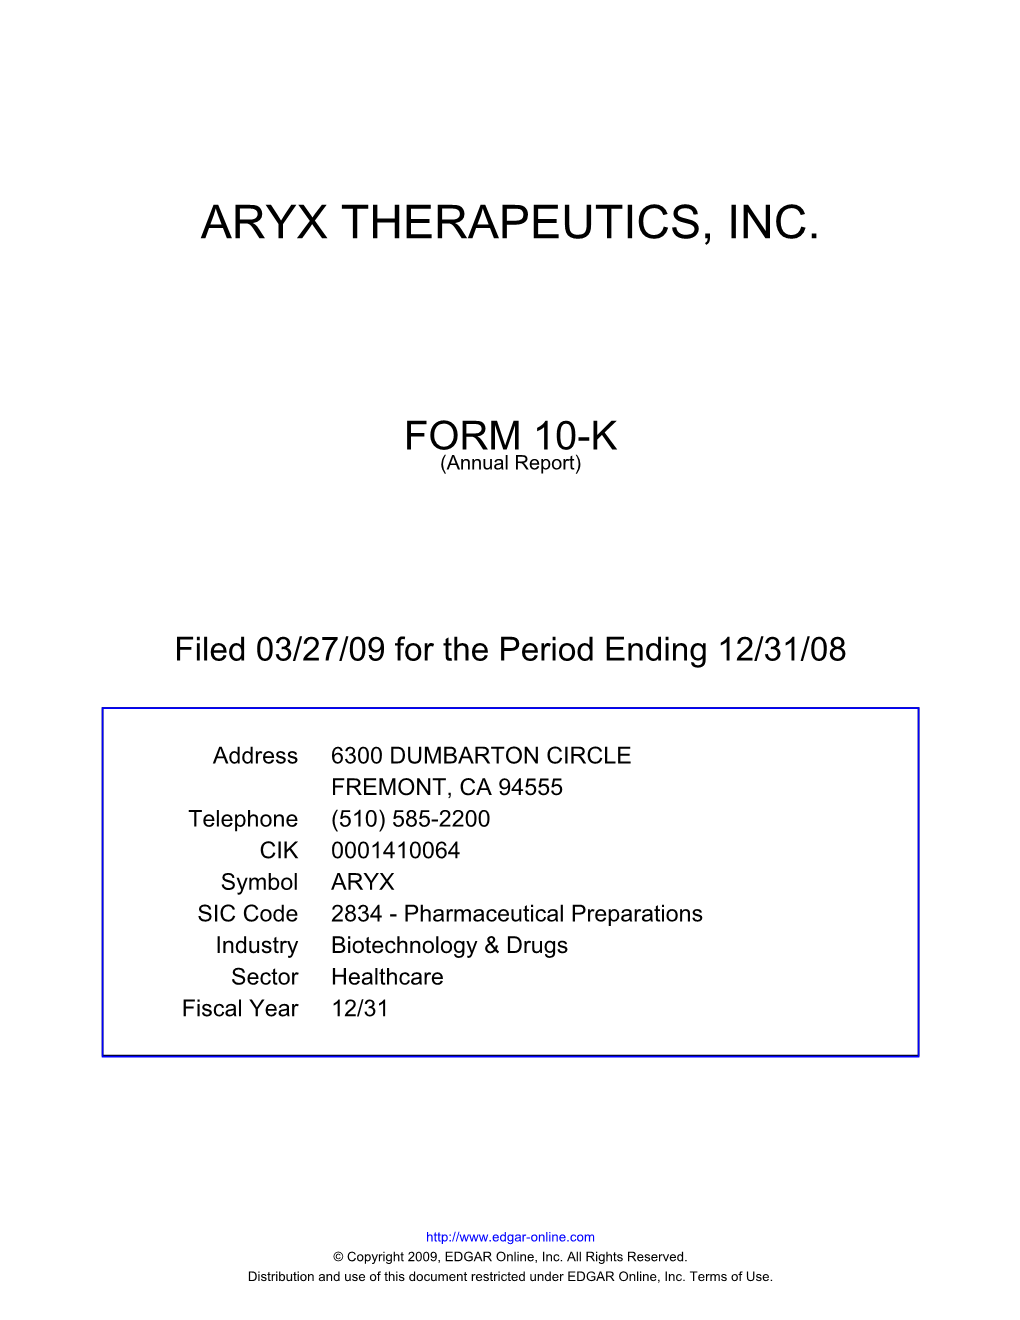 Aryx Therapeutics, Inc